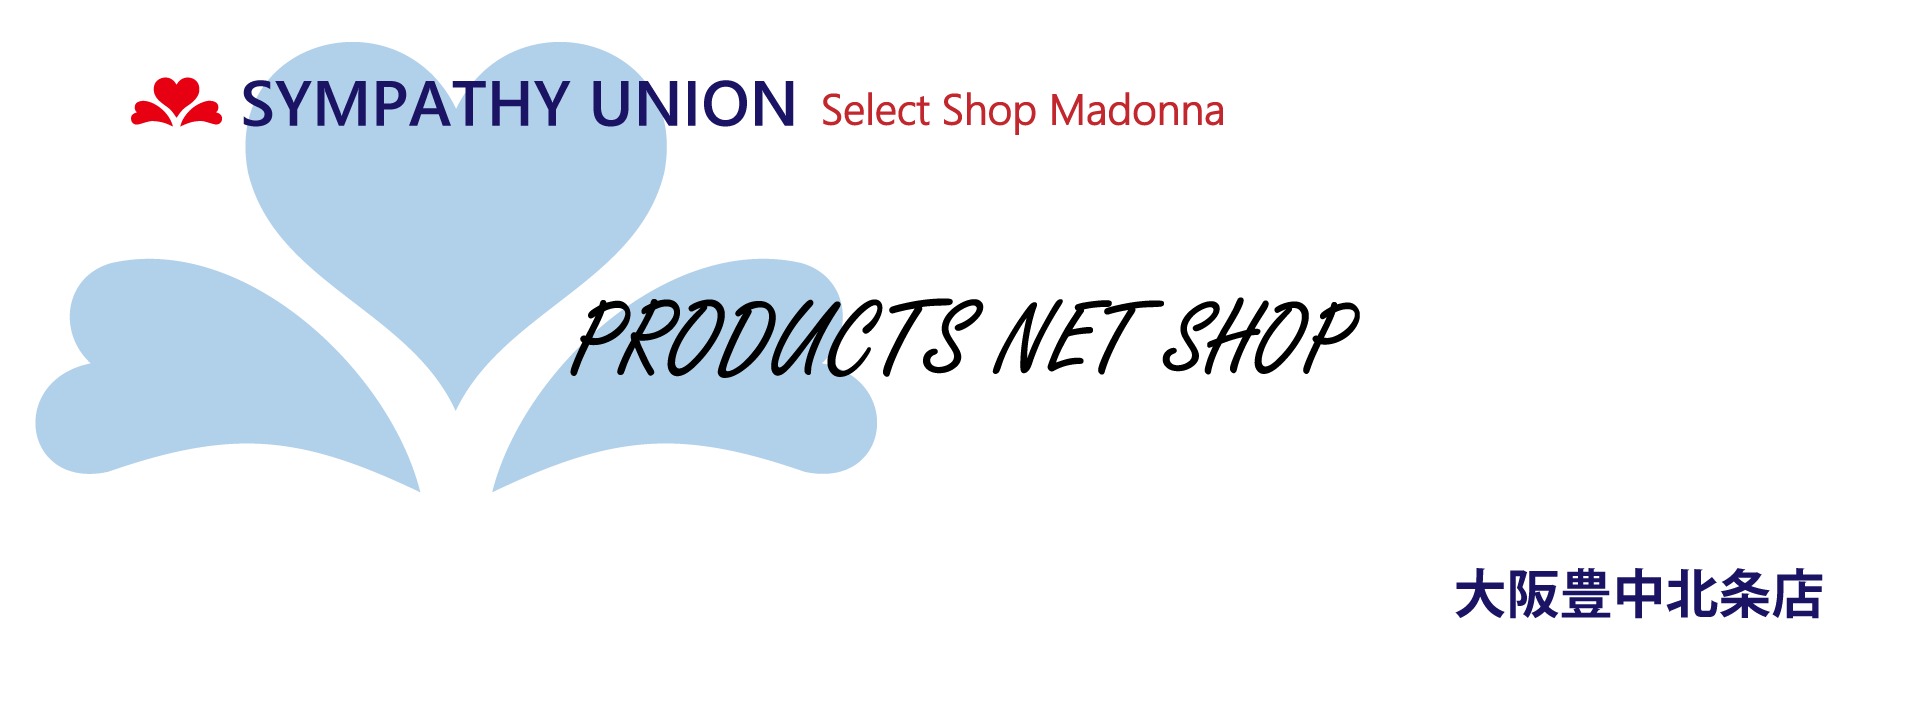 Select Shop Madonna 大阪豊中北条店